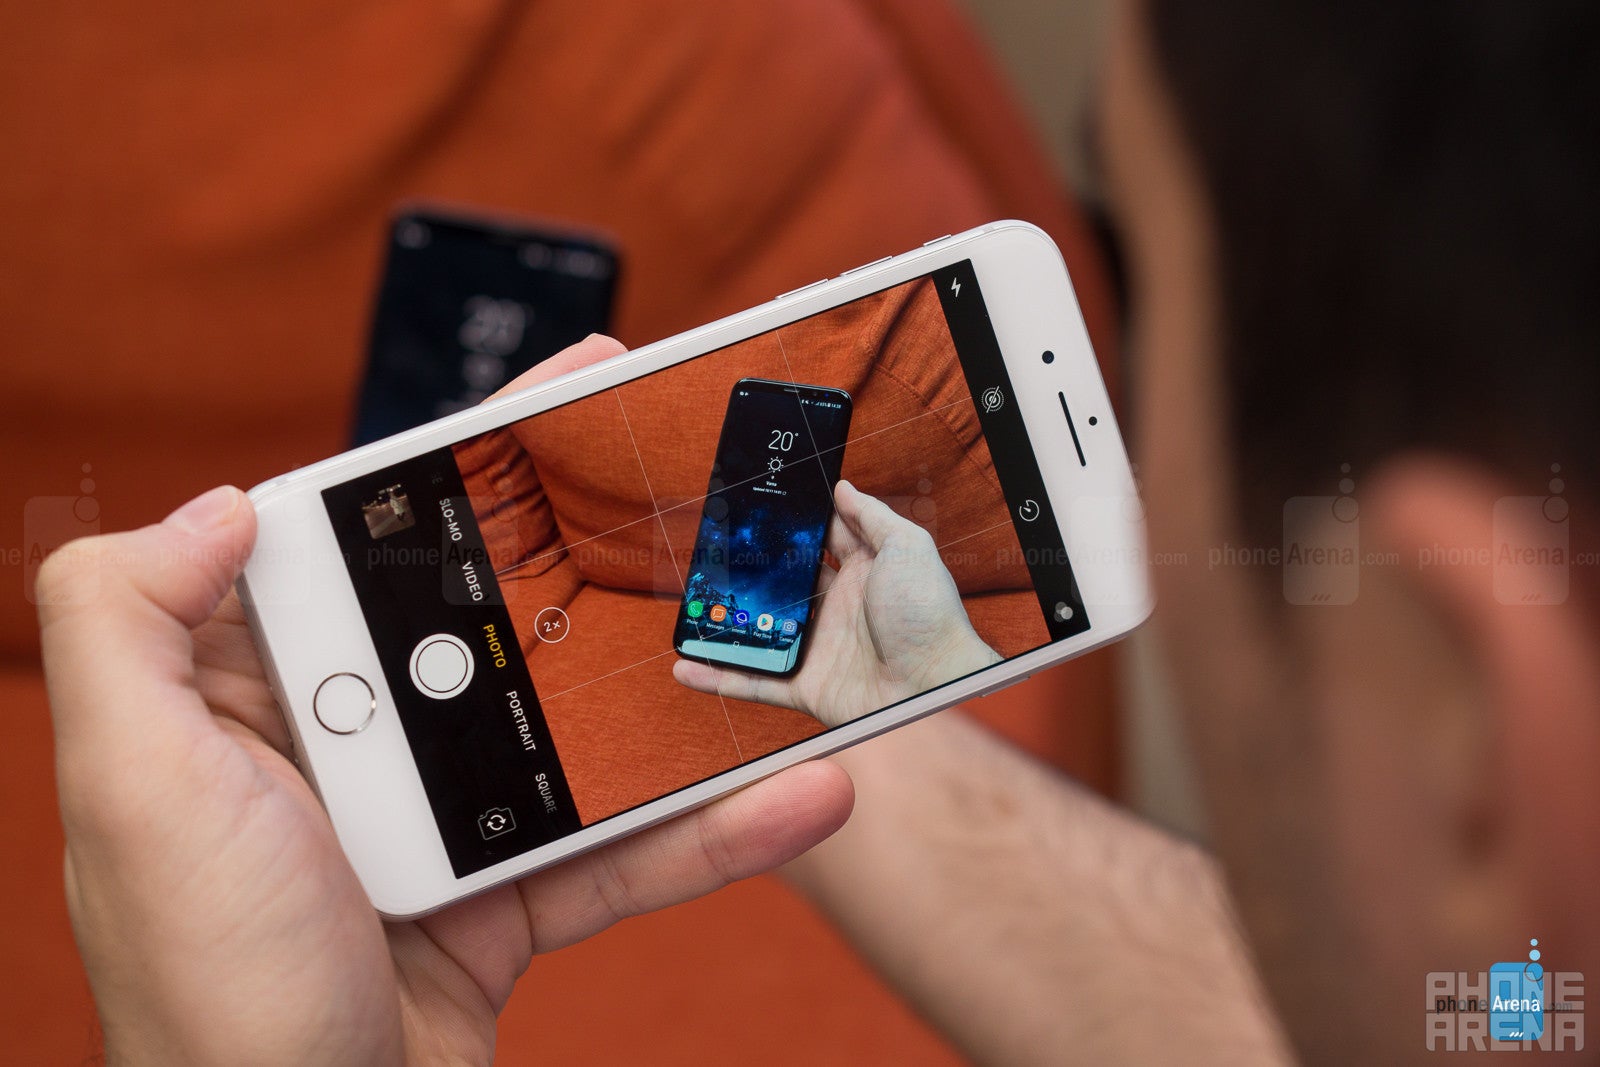 Apple iPhone 8 Plus vs Samsung Galaxy S8+